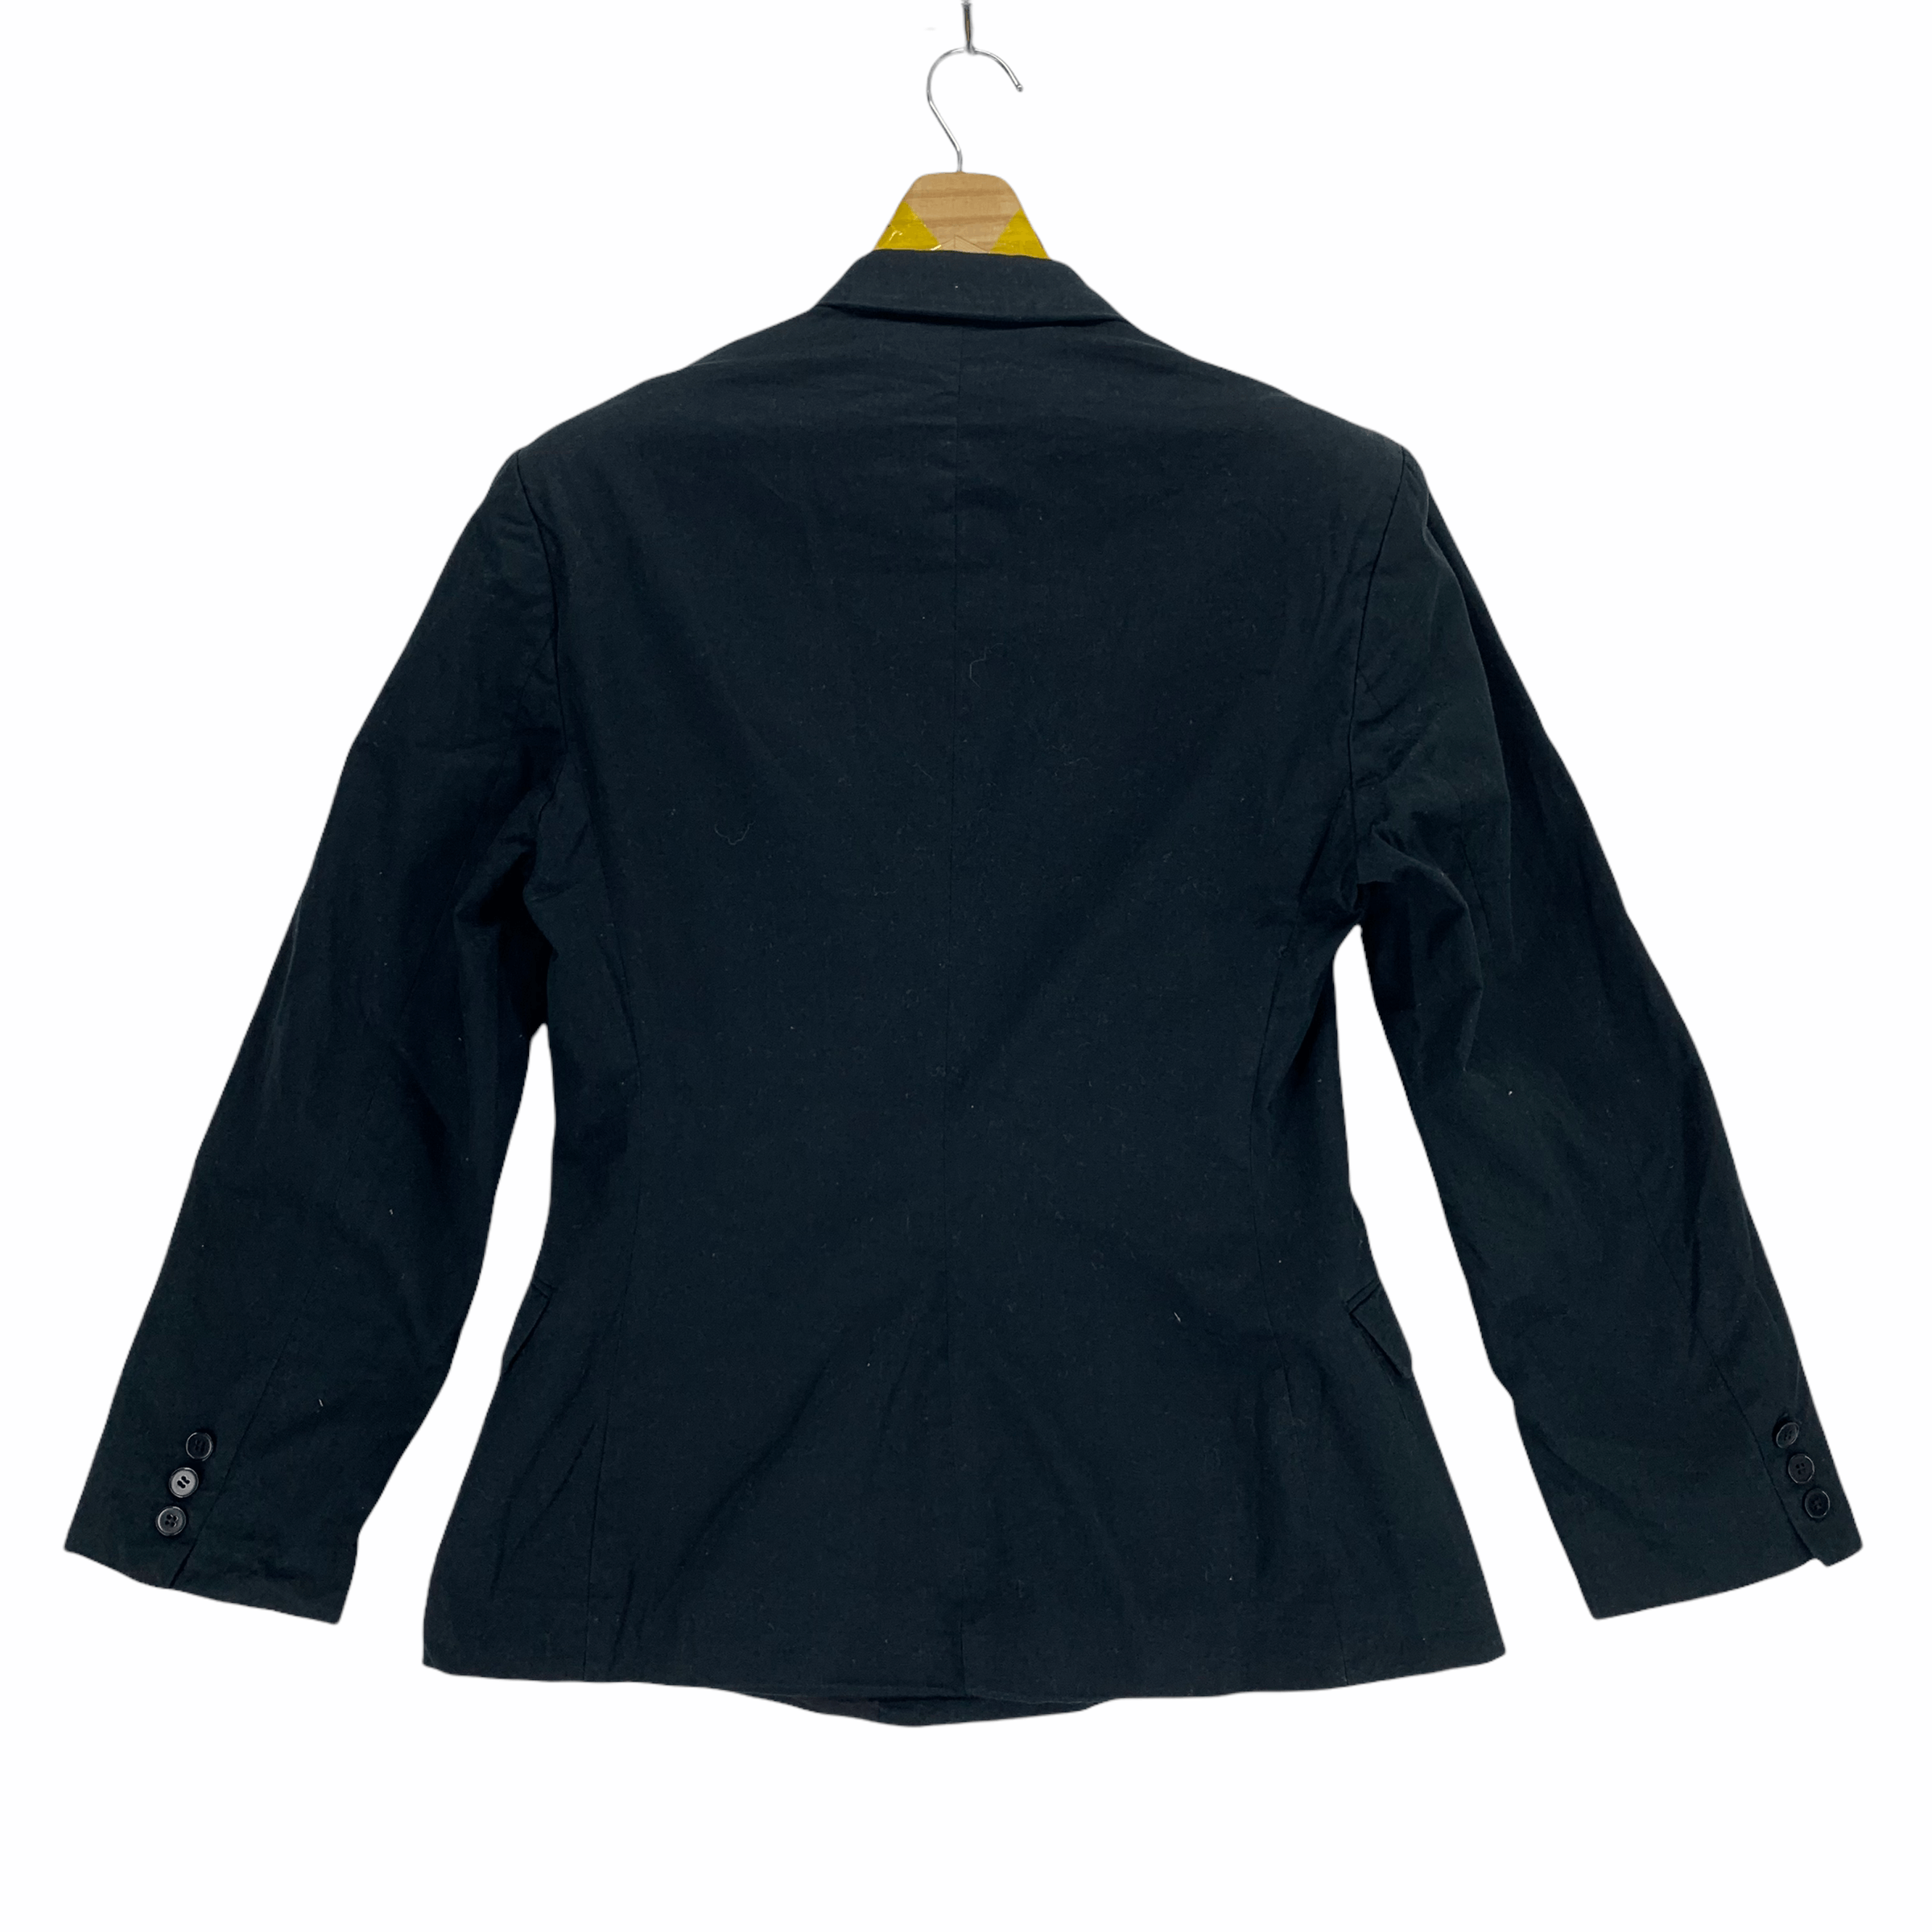 Agnes B. Agnes B. Made in Japan Suit Jacket / Blazer #3276-117 Size XS / US 0-2 / IT 36-38 - 8 Preview